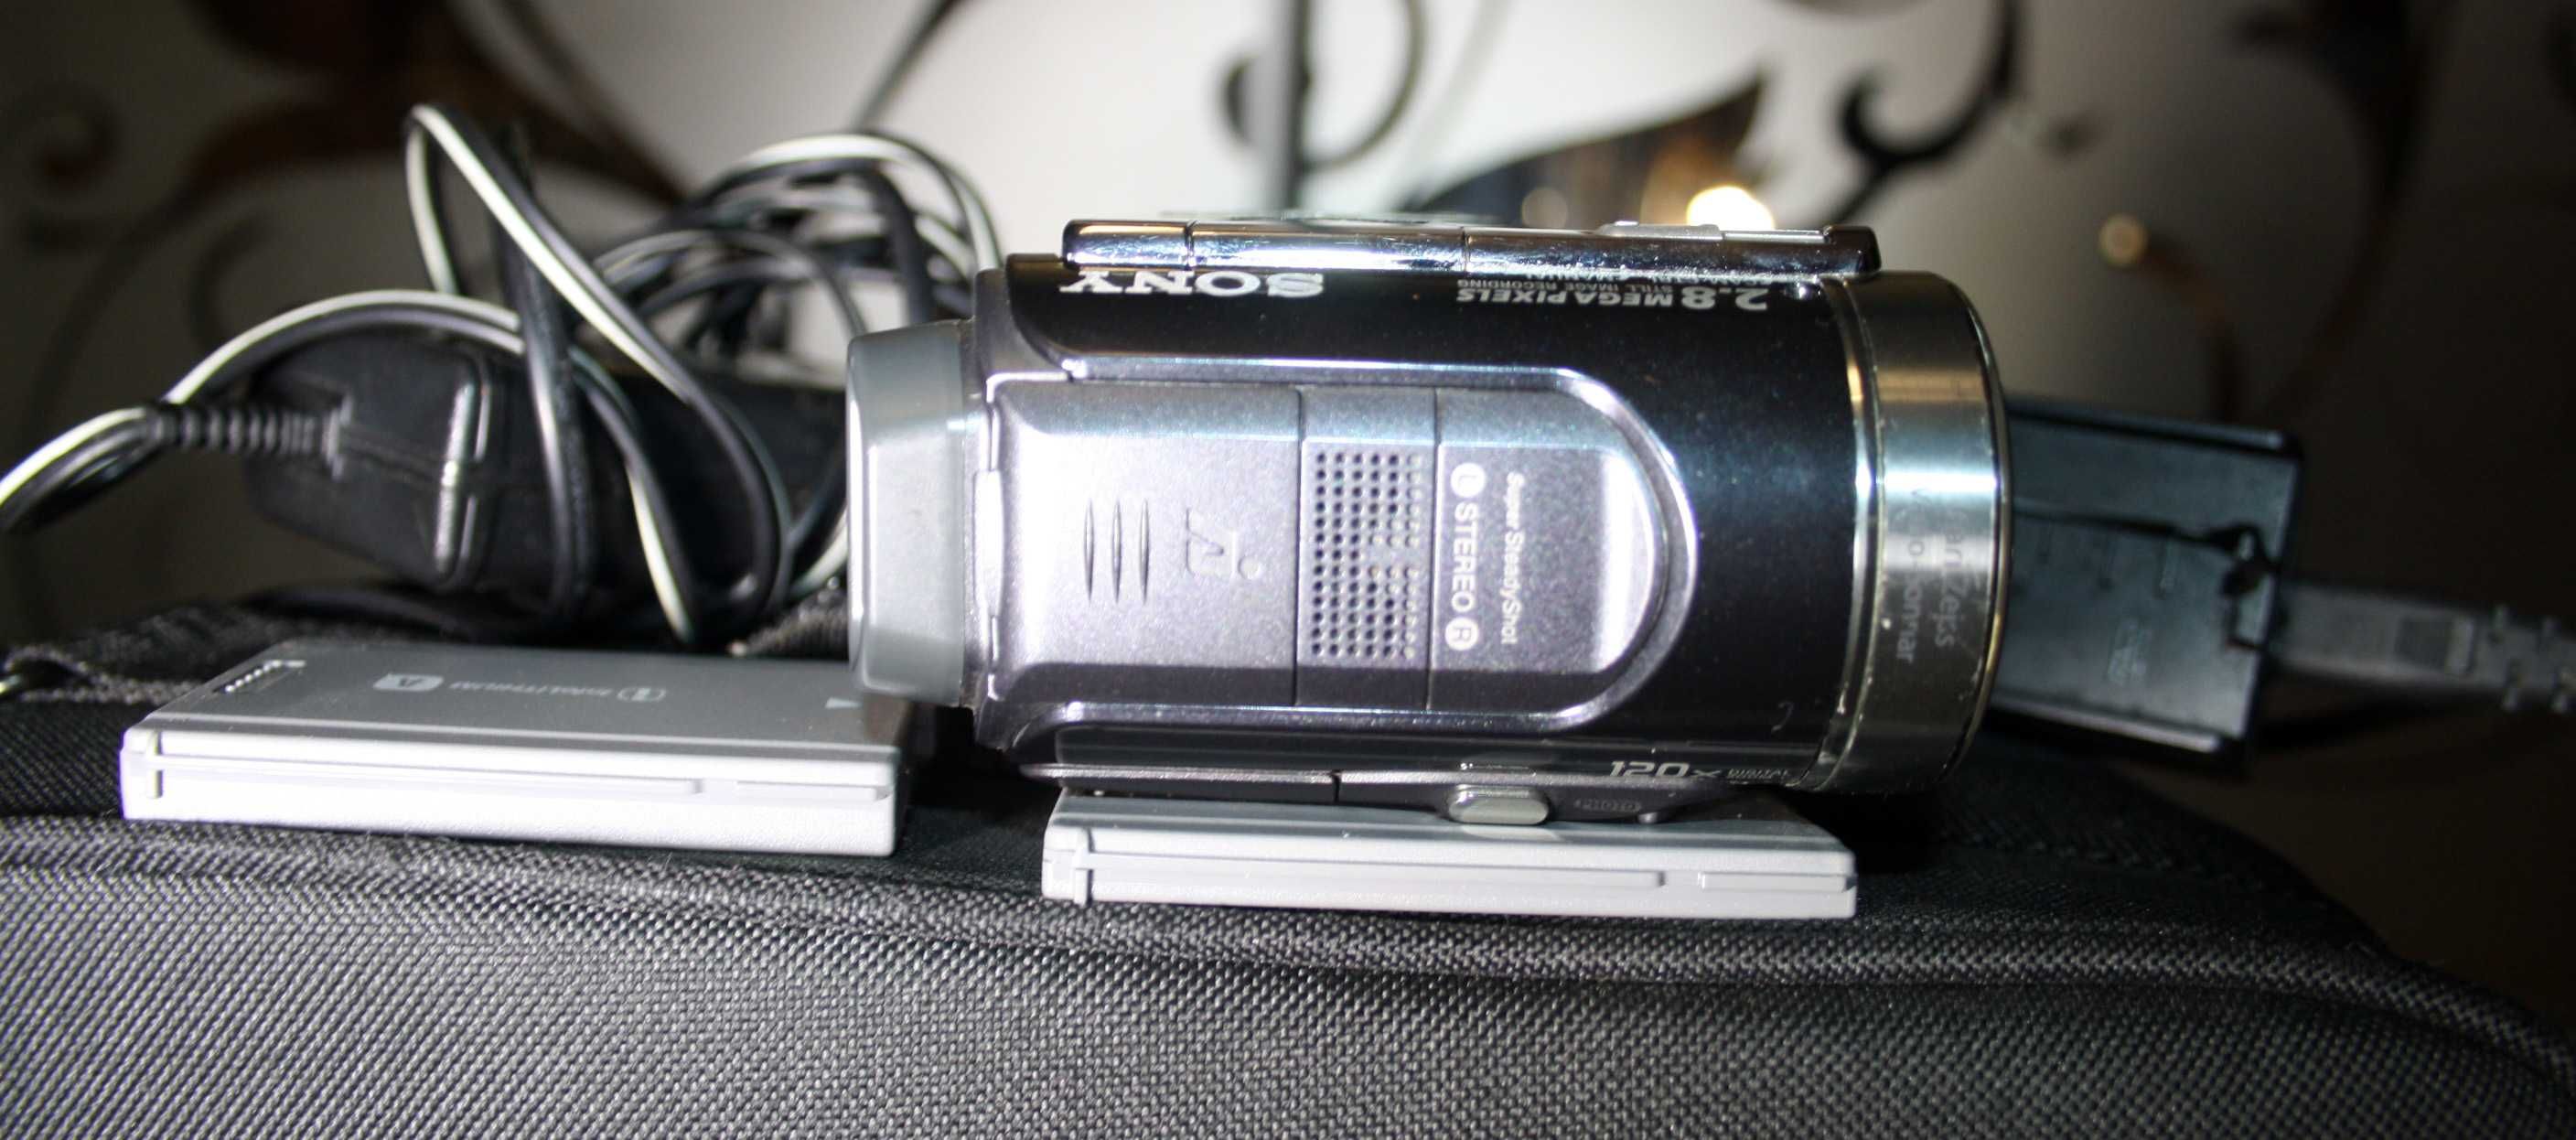 Видеокамера три матрицы Sony DCR-PC 1000E .